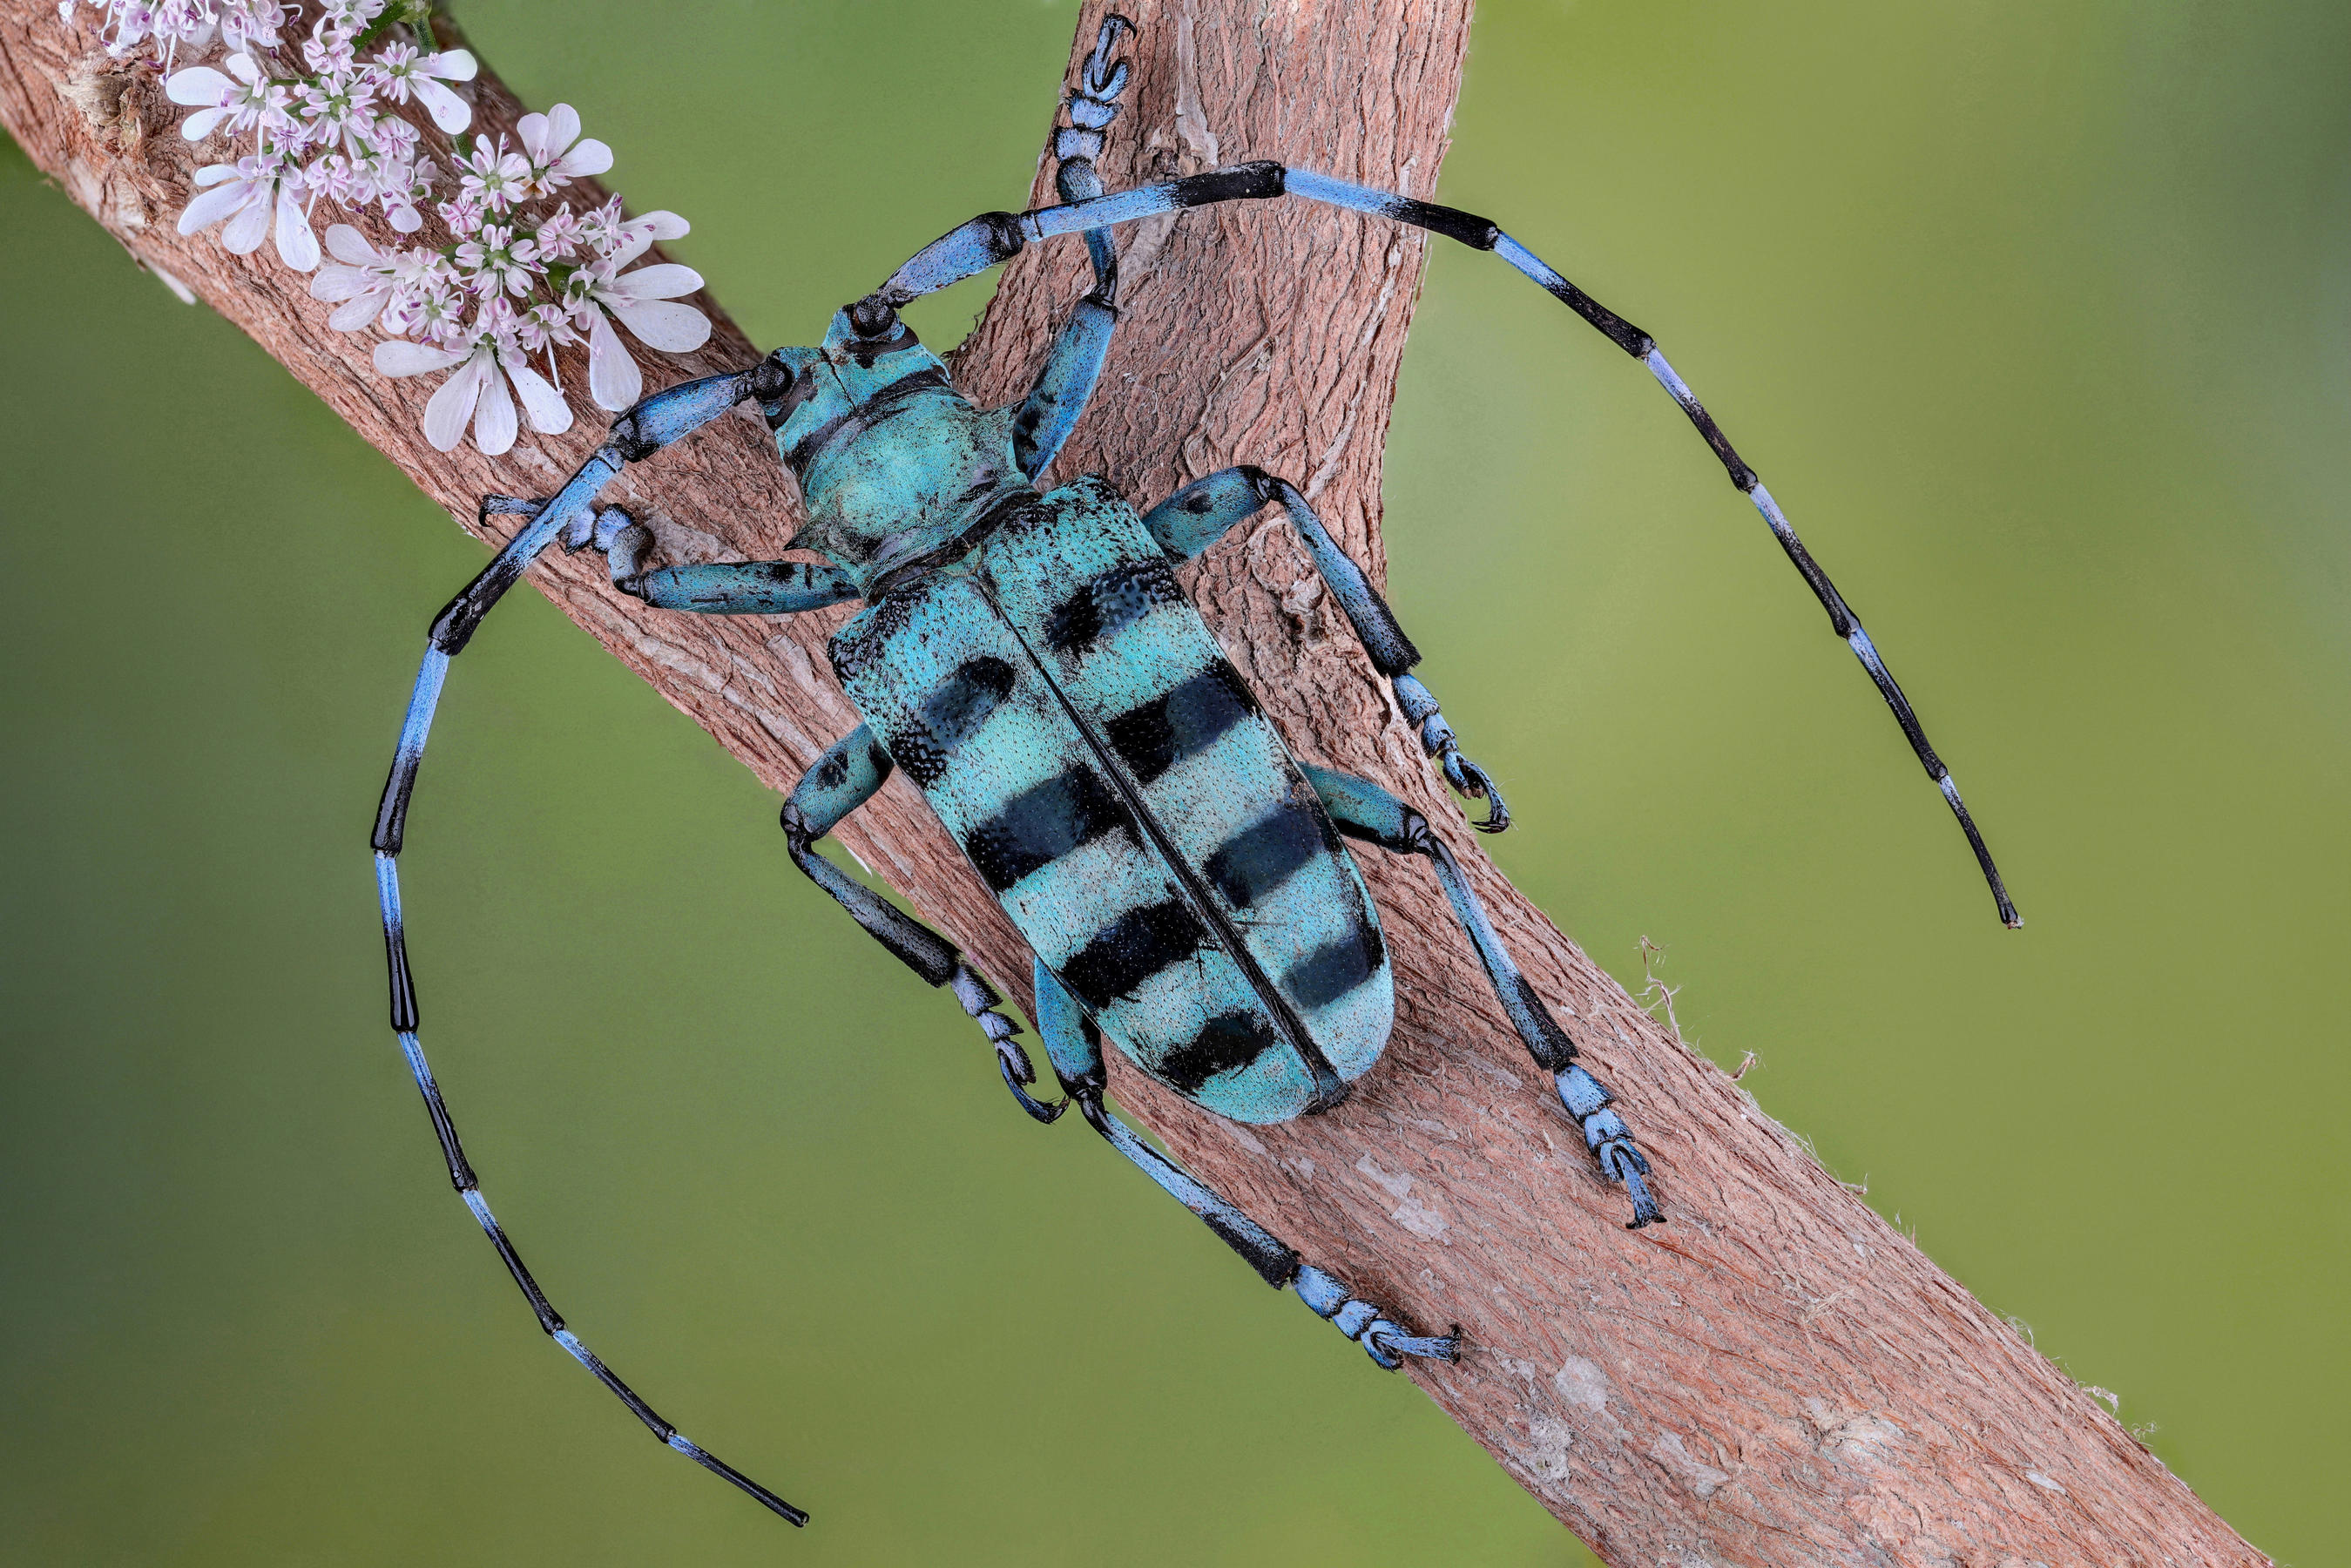 “Blue Longhorn Beetle” © Mofeed Abu Shalwa, journal of wild culture ©2020